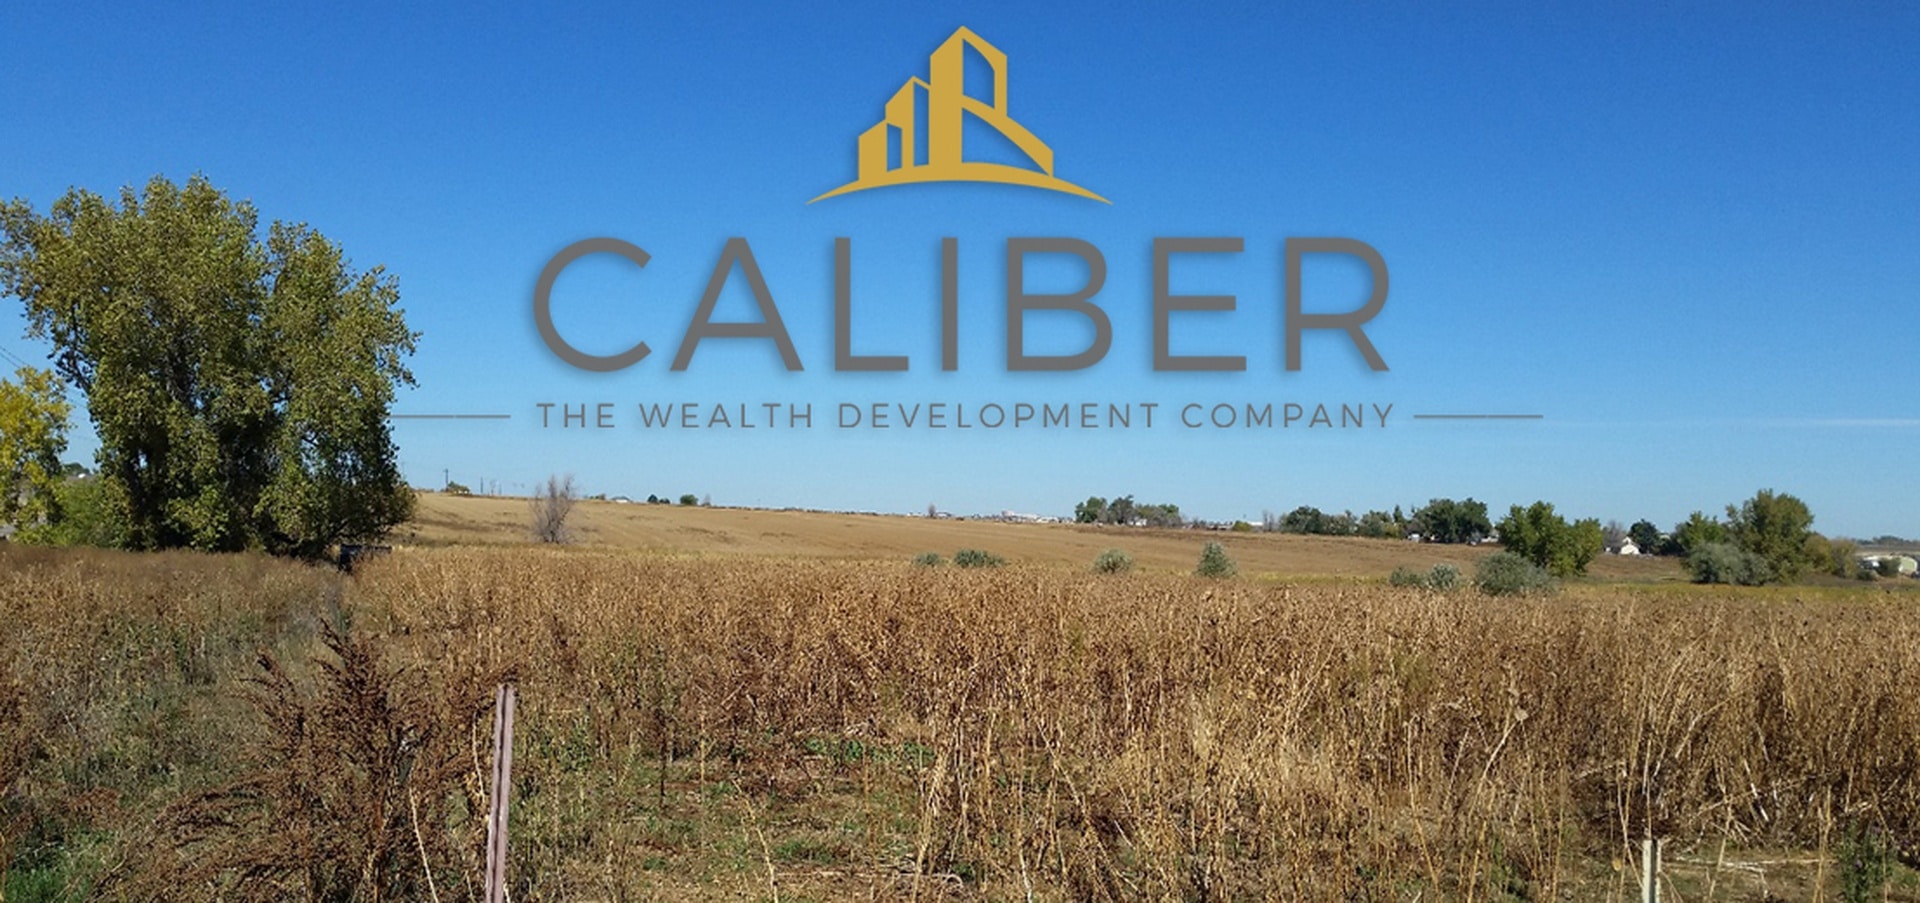 Caliber the Wealth Development Company Logo on Johnstown Backdrop of Landscape